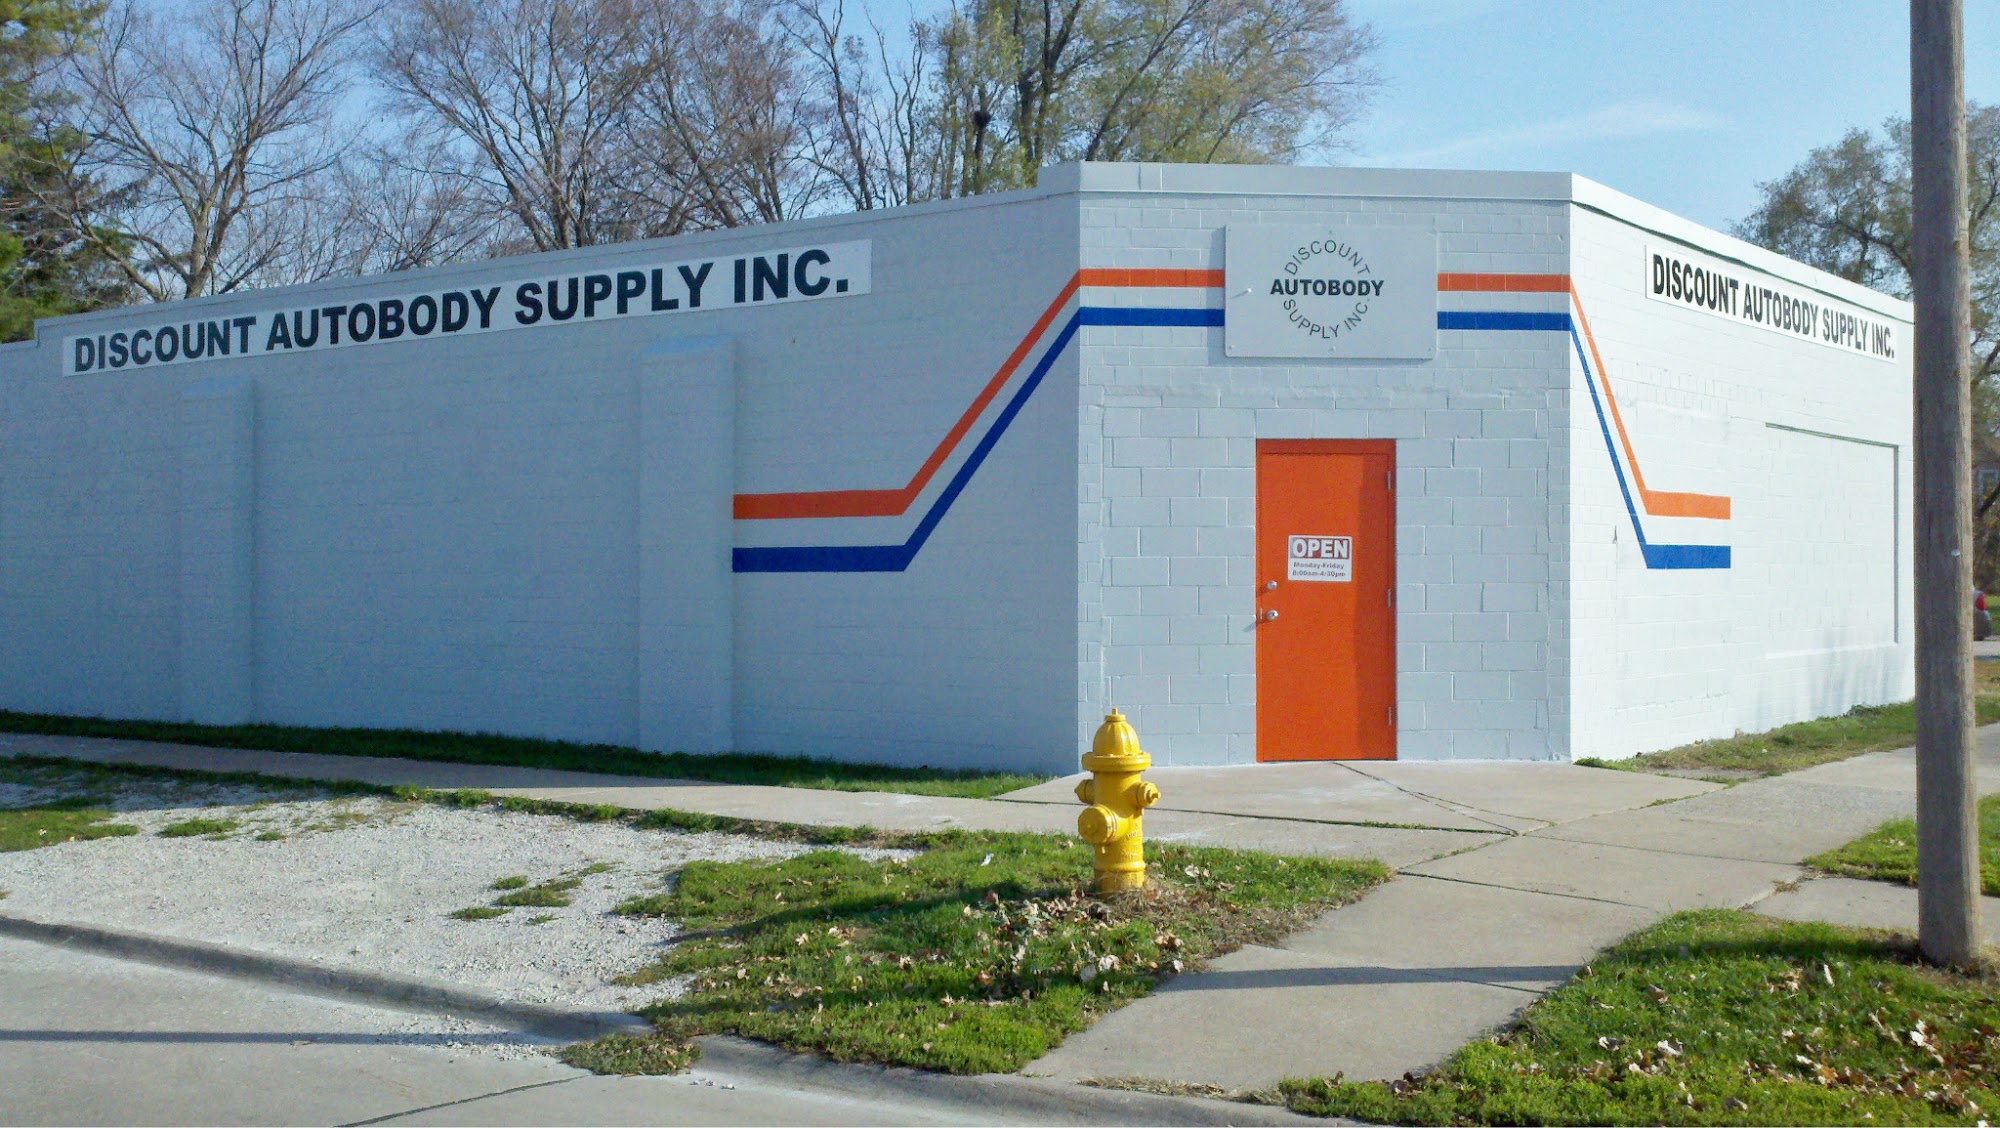 Discount Autobody Supply Inc